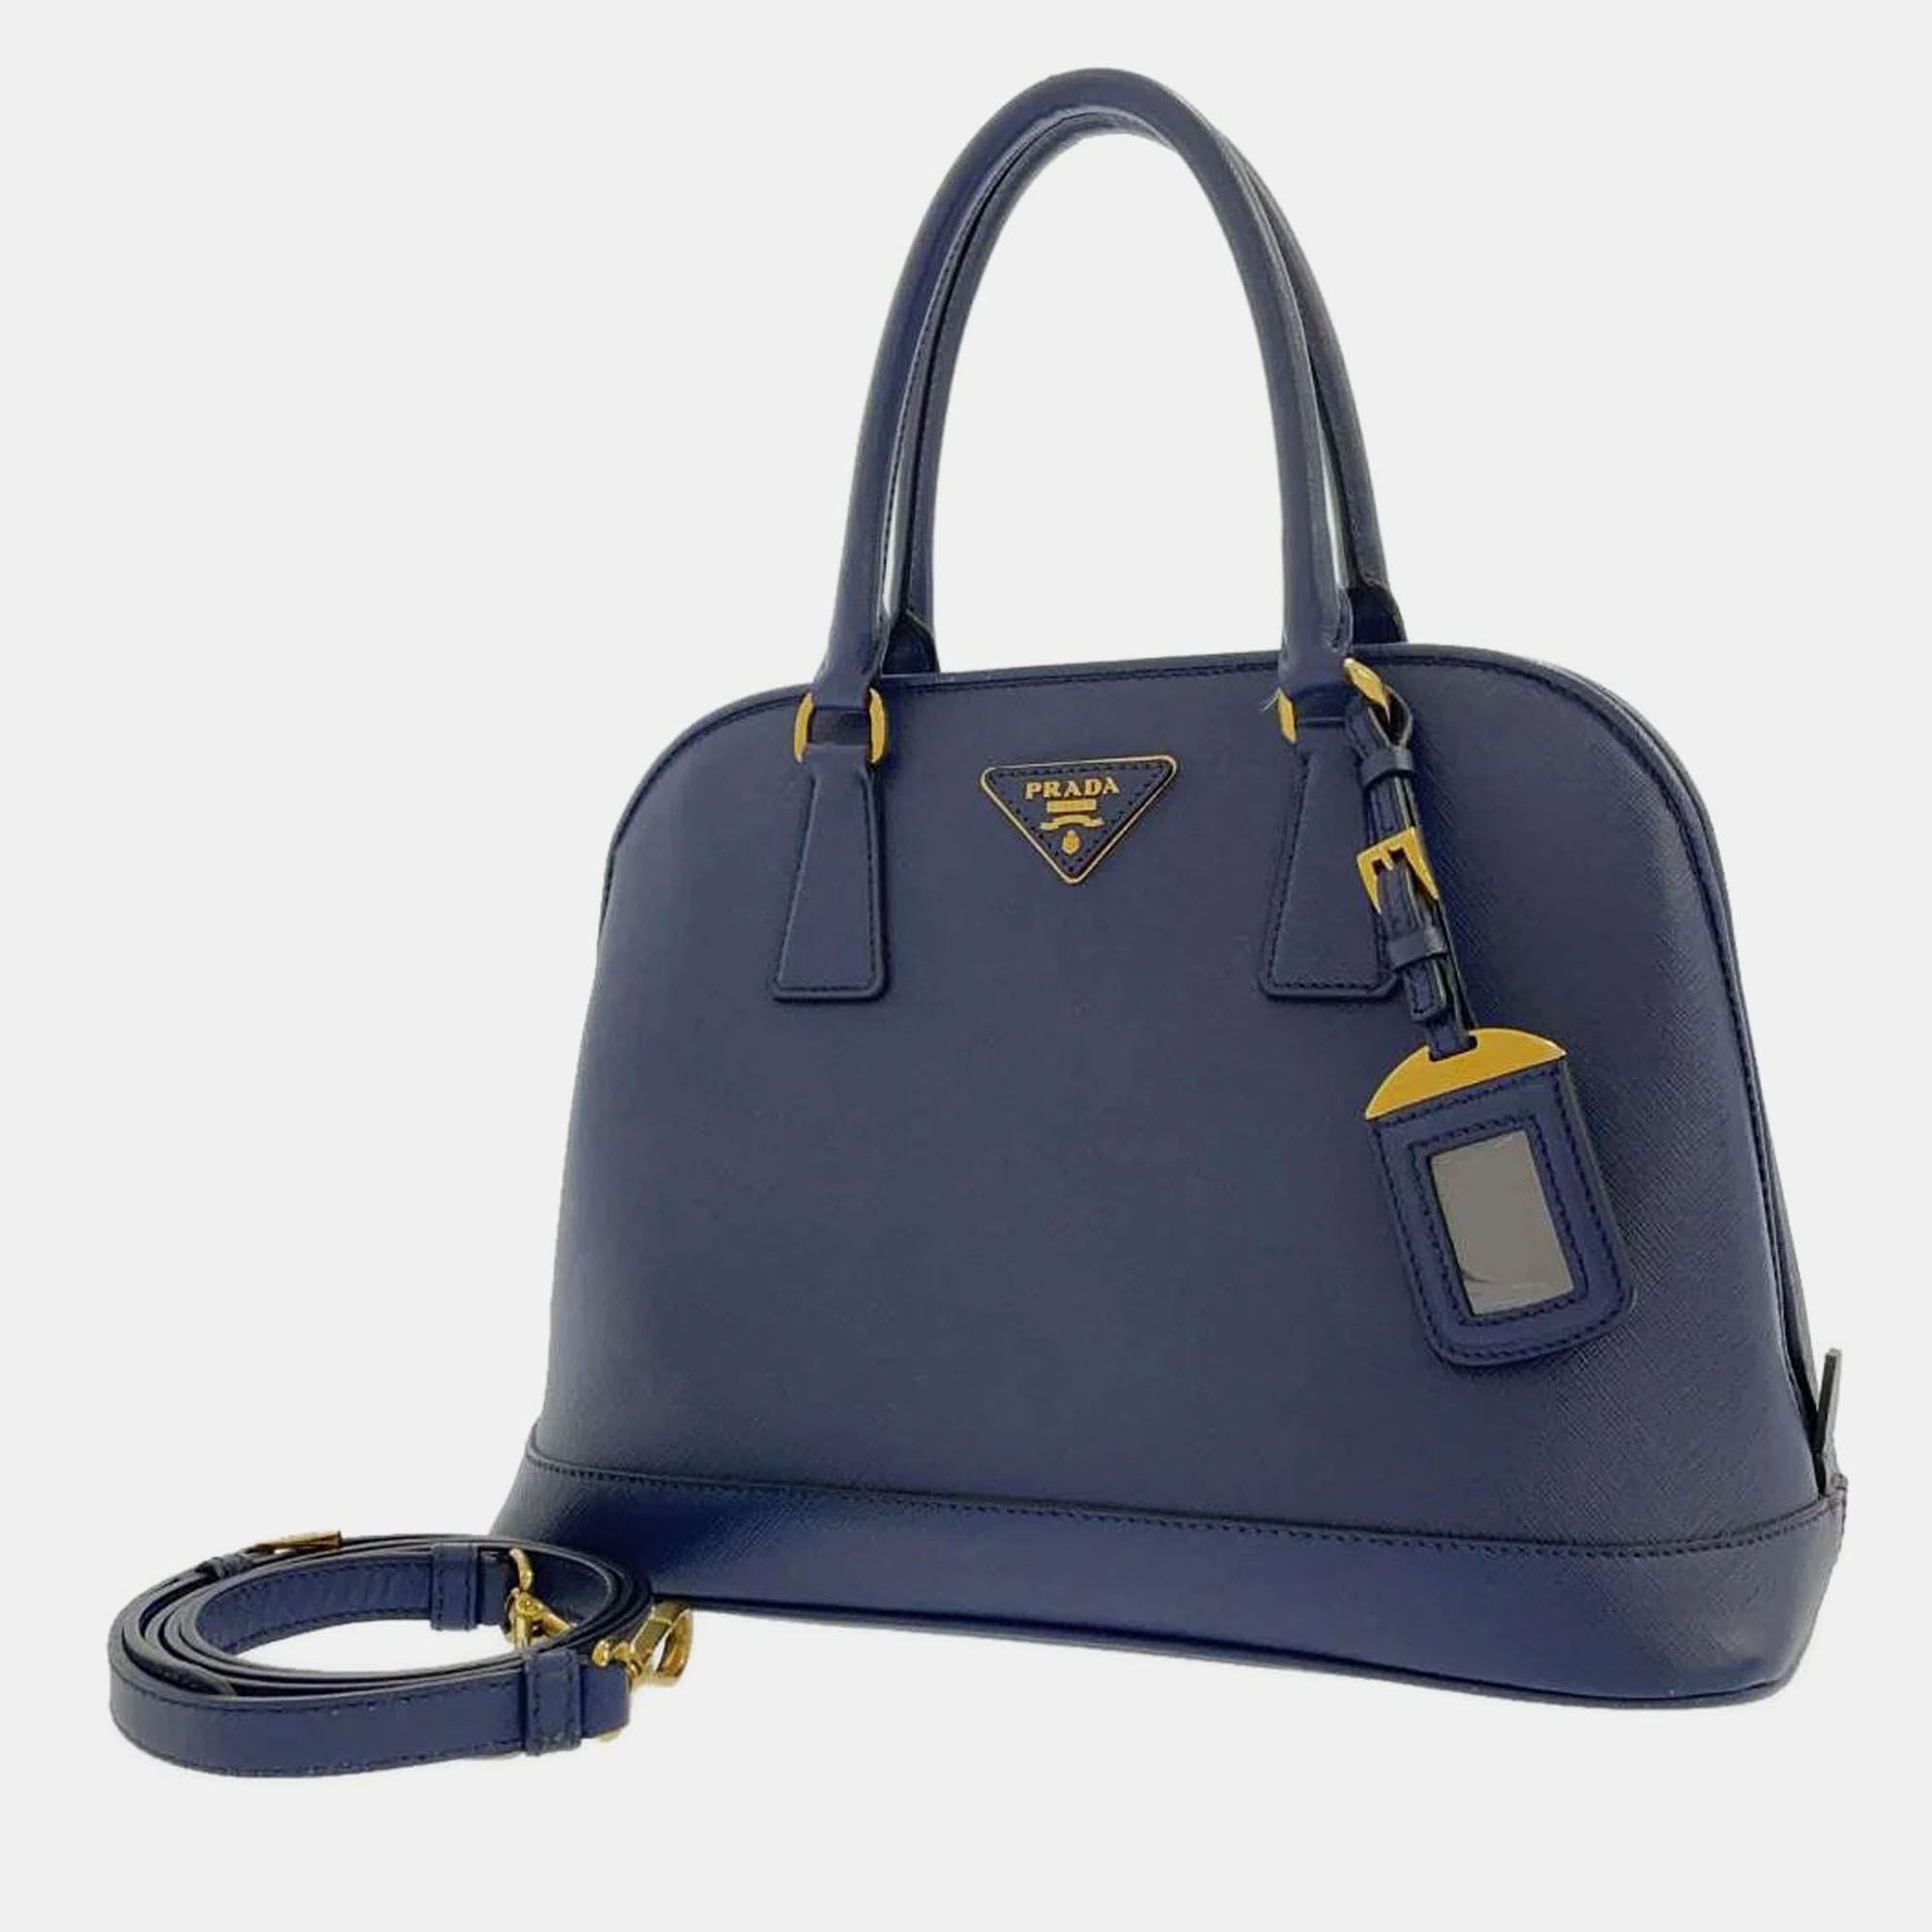 

PRADA Blue Saffiano Leather Promenade Satchel Bag